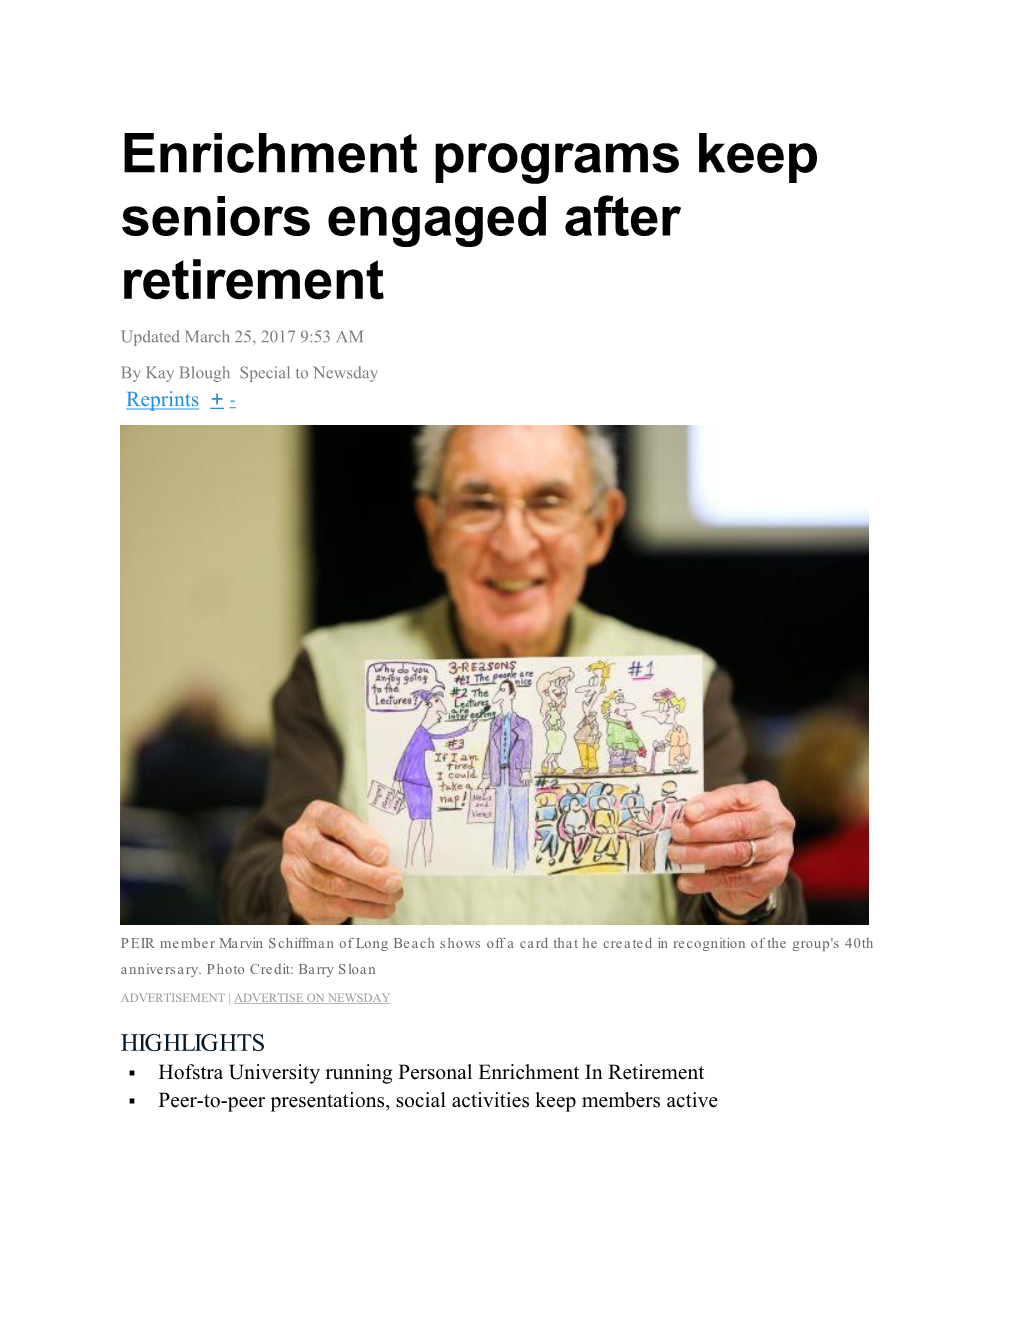 Enrichment Programs Keep Seniors Engaged After Retirement